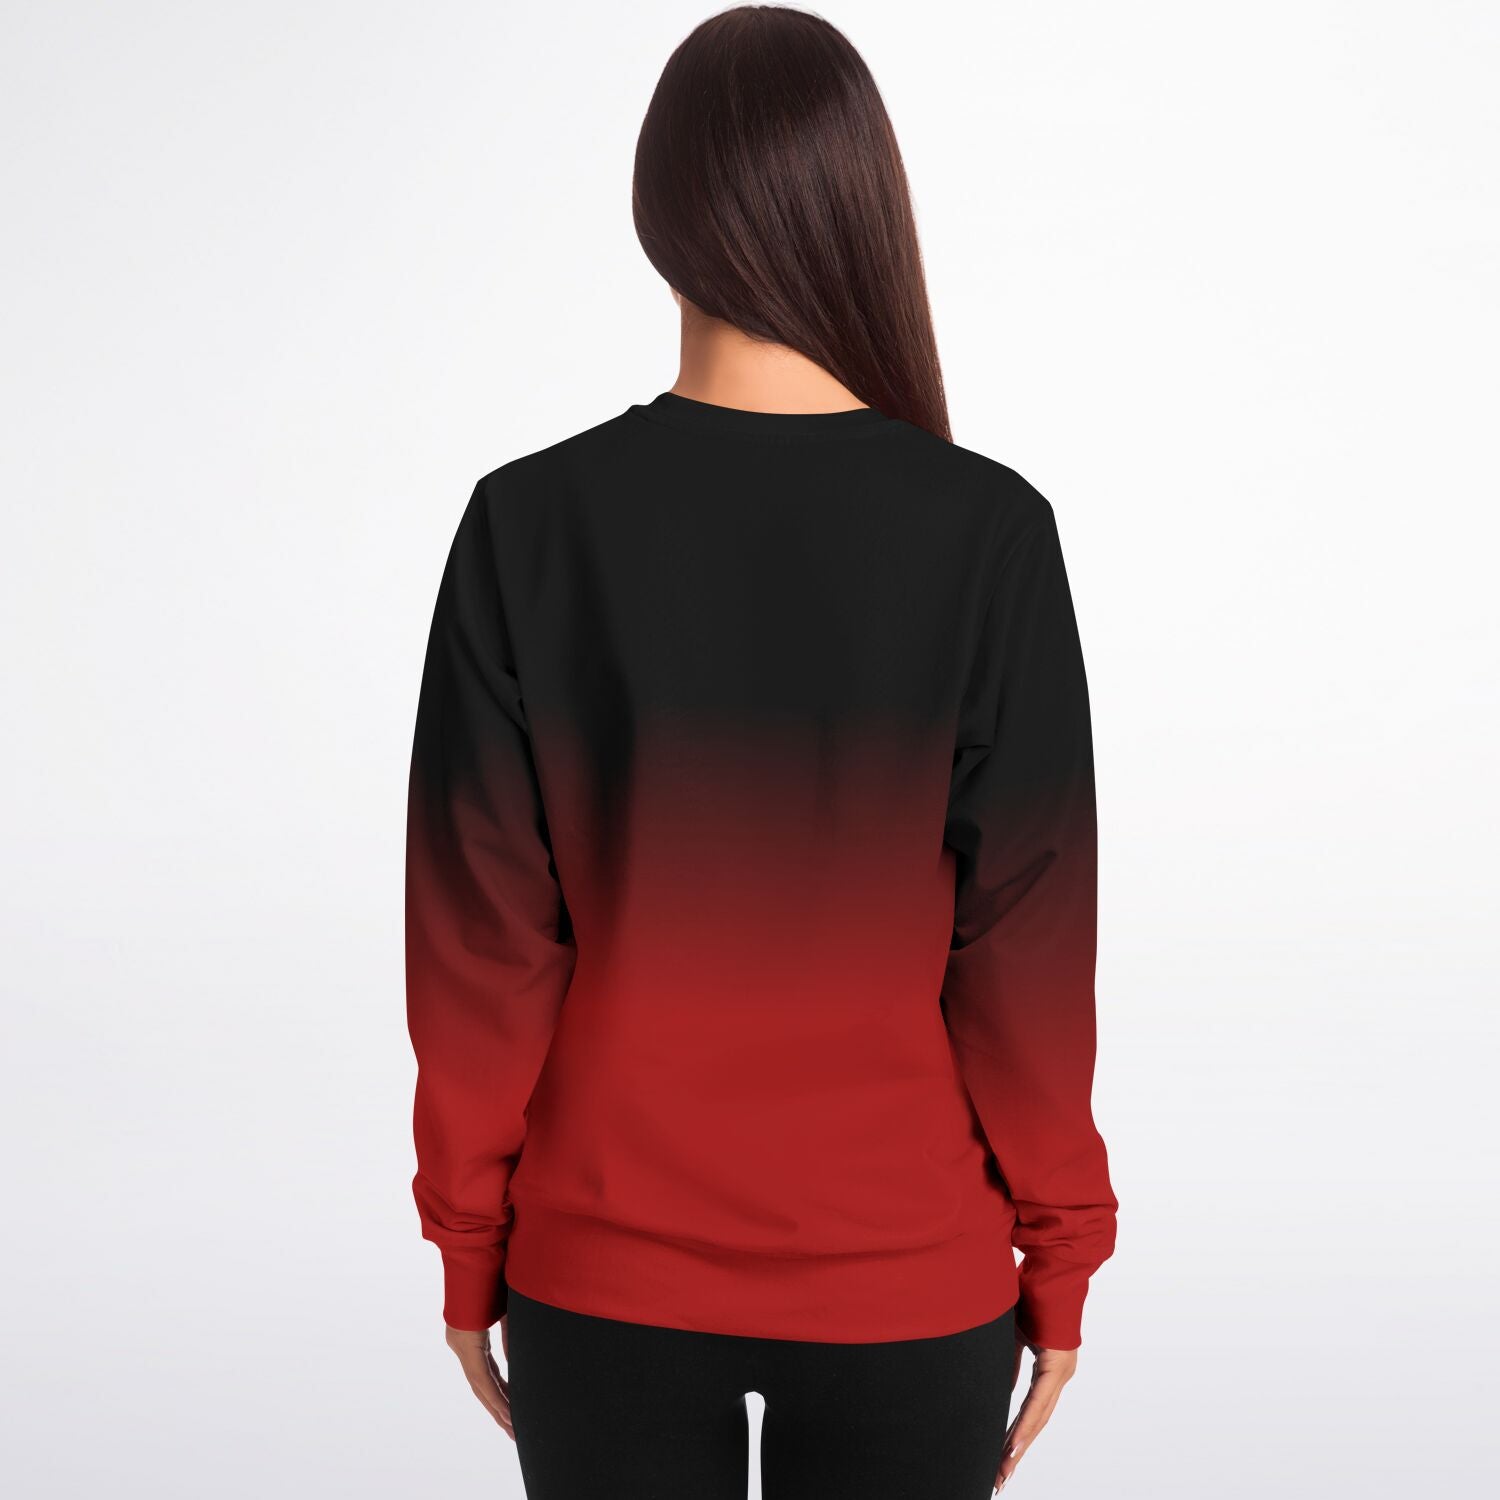 LOVE Cozy Fleece Red Sweatshirt W/Black Letters Print PARIS/front/ LONDON/ back/